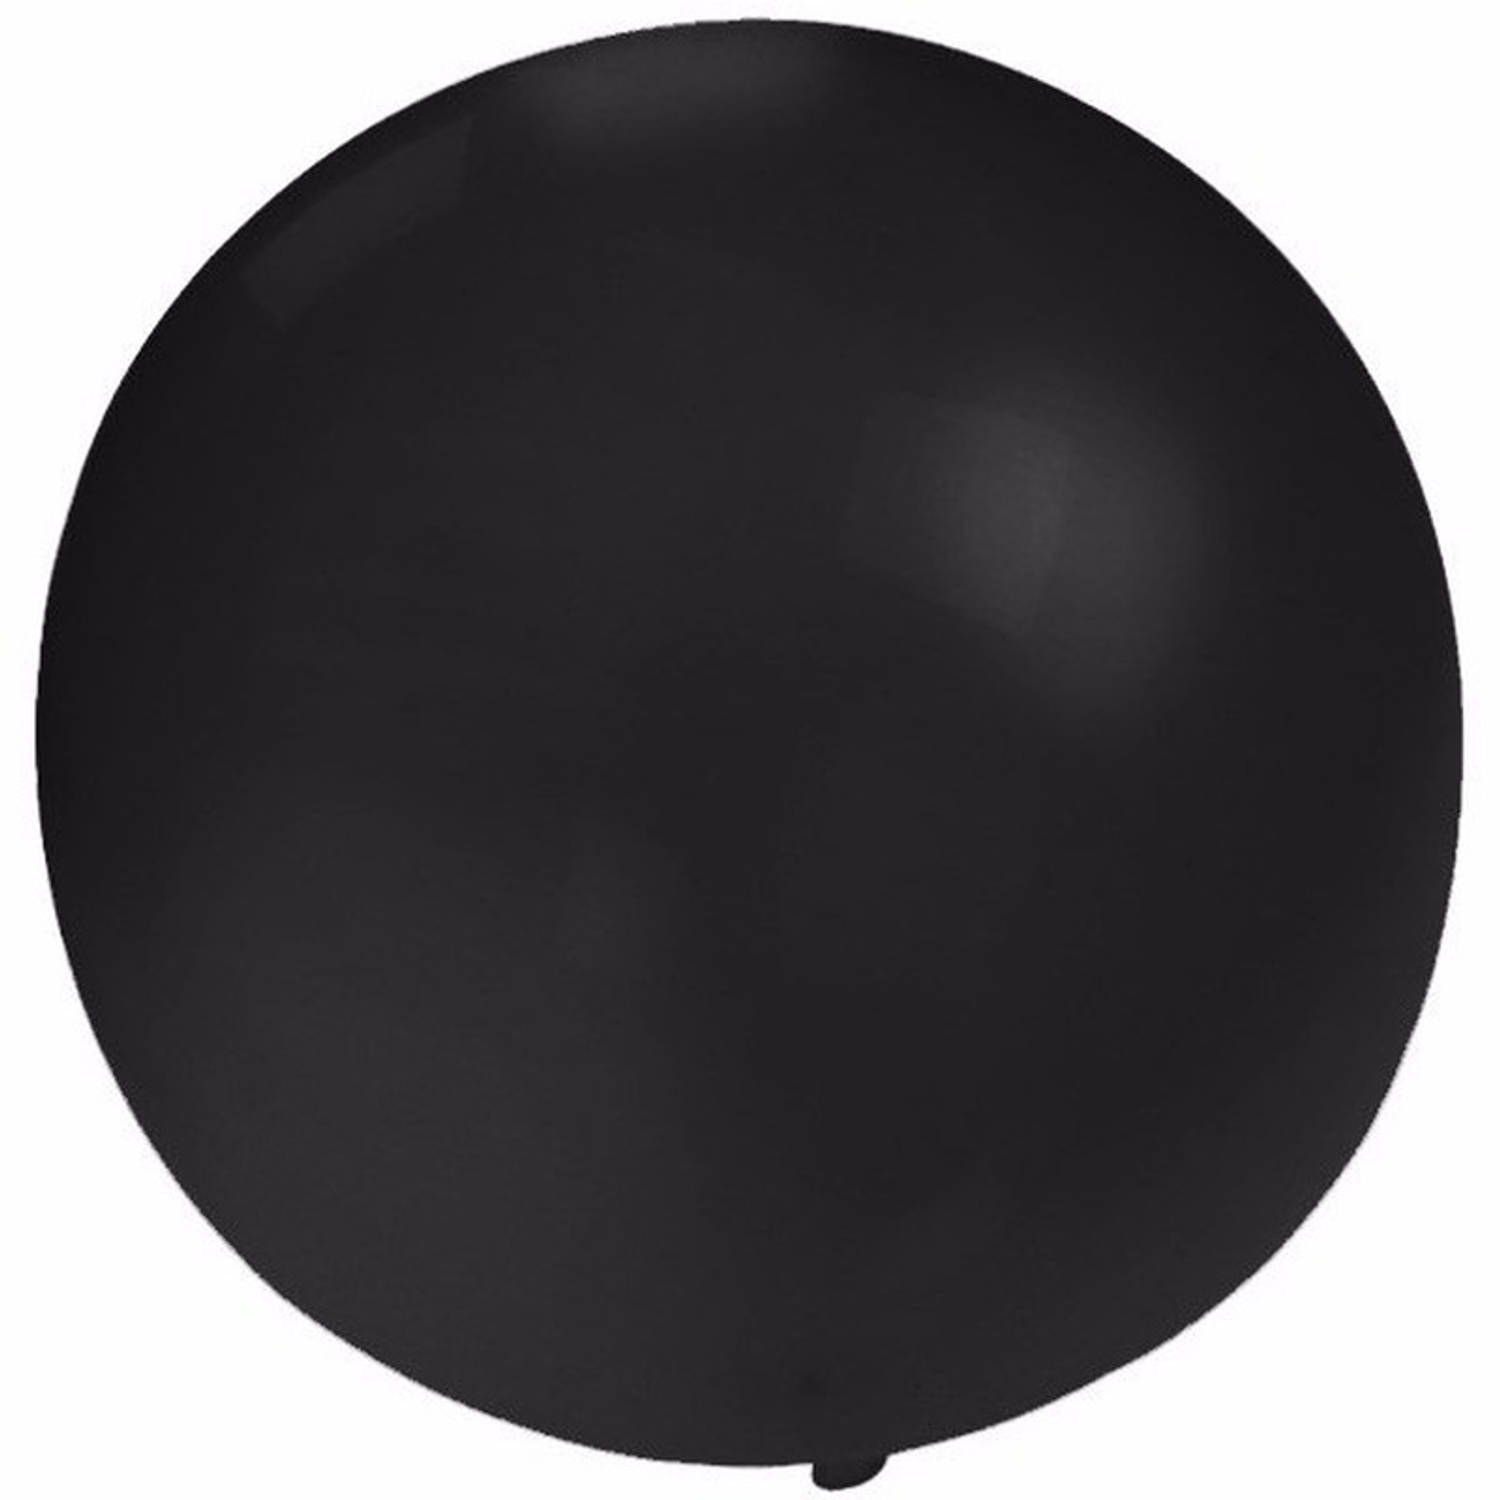 Ballon 24 inch Ã˜ 60 cm Zwart